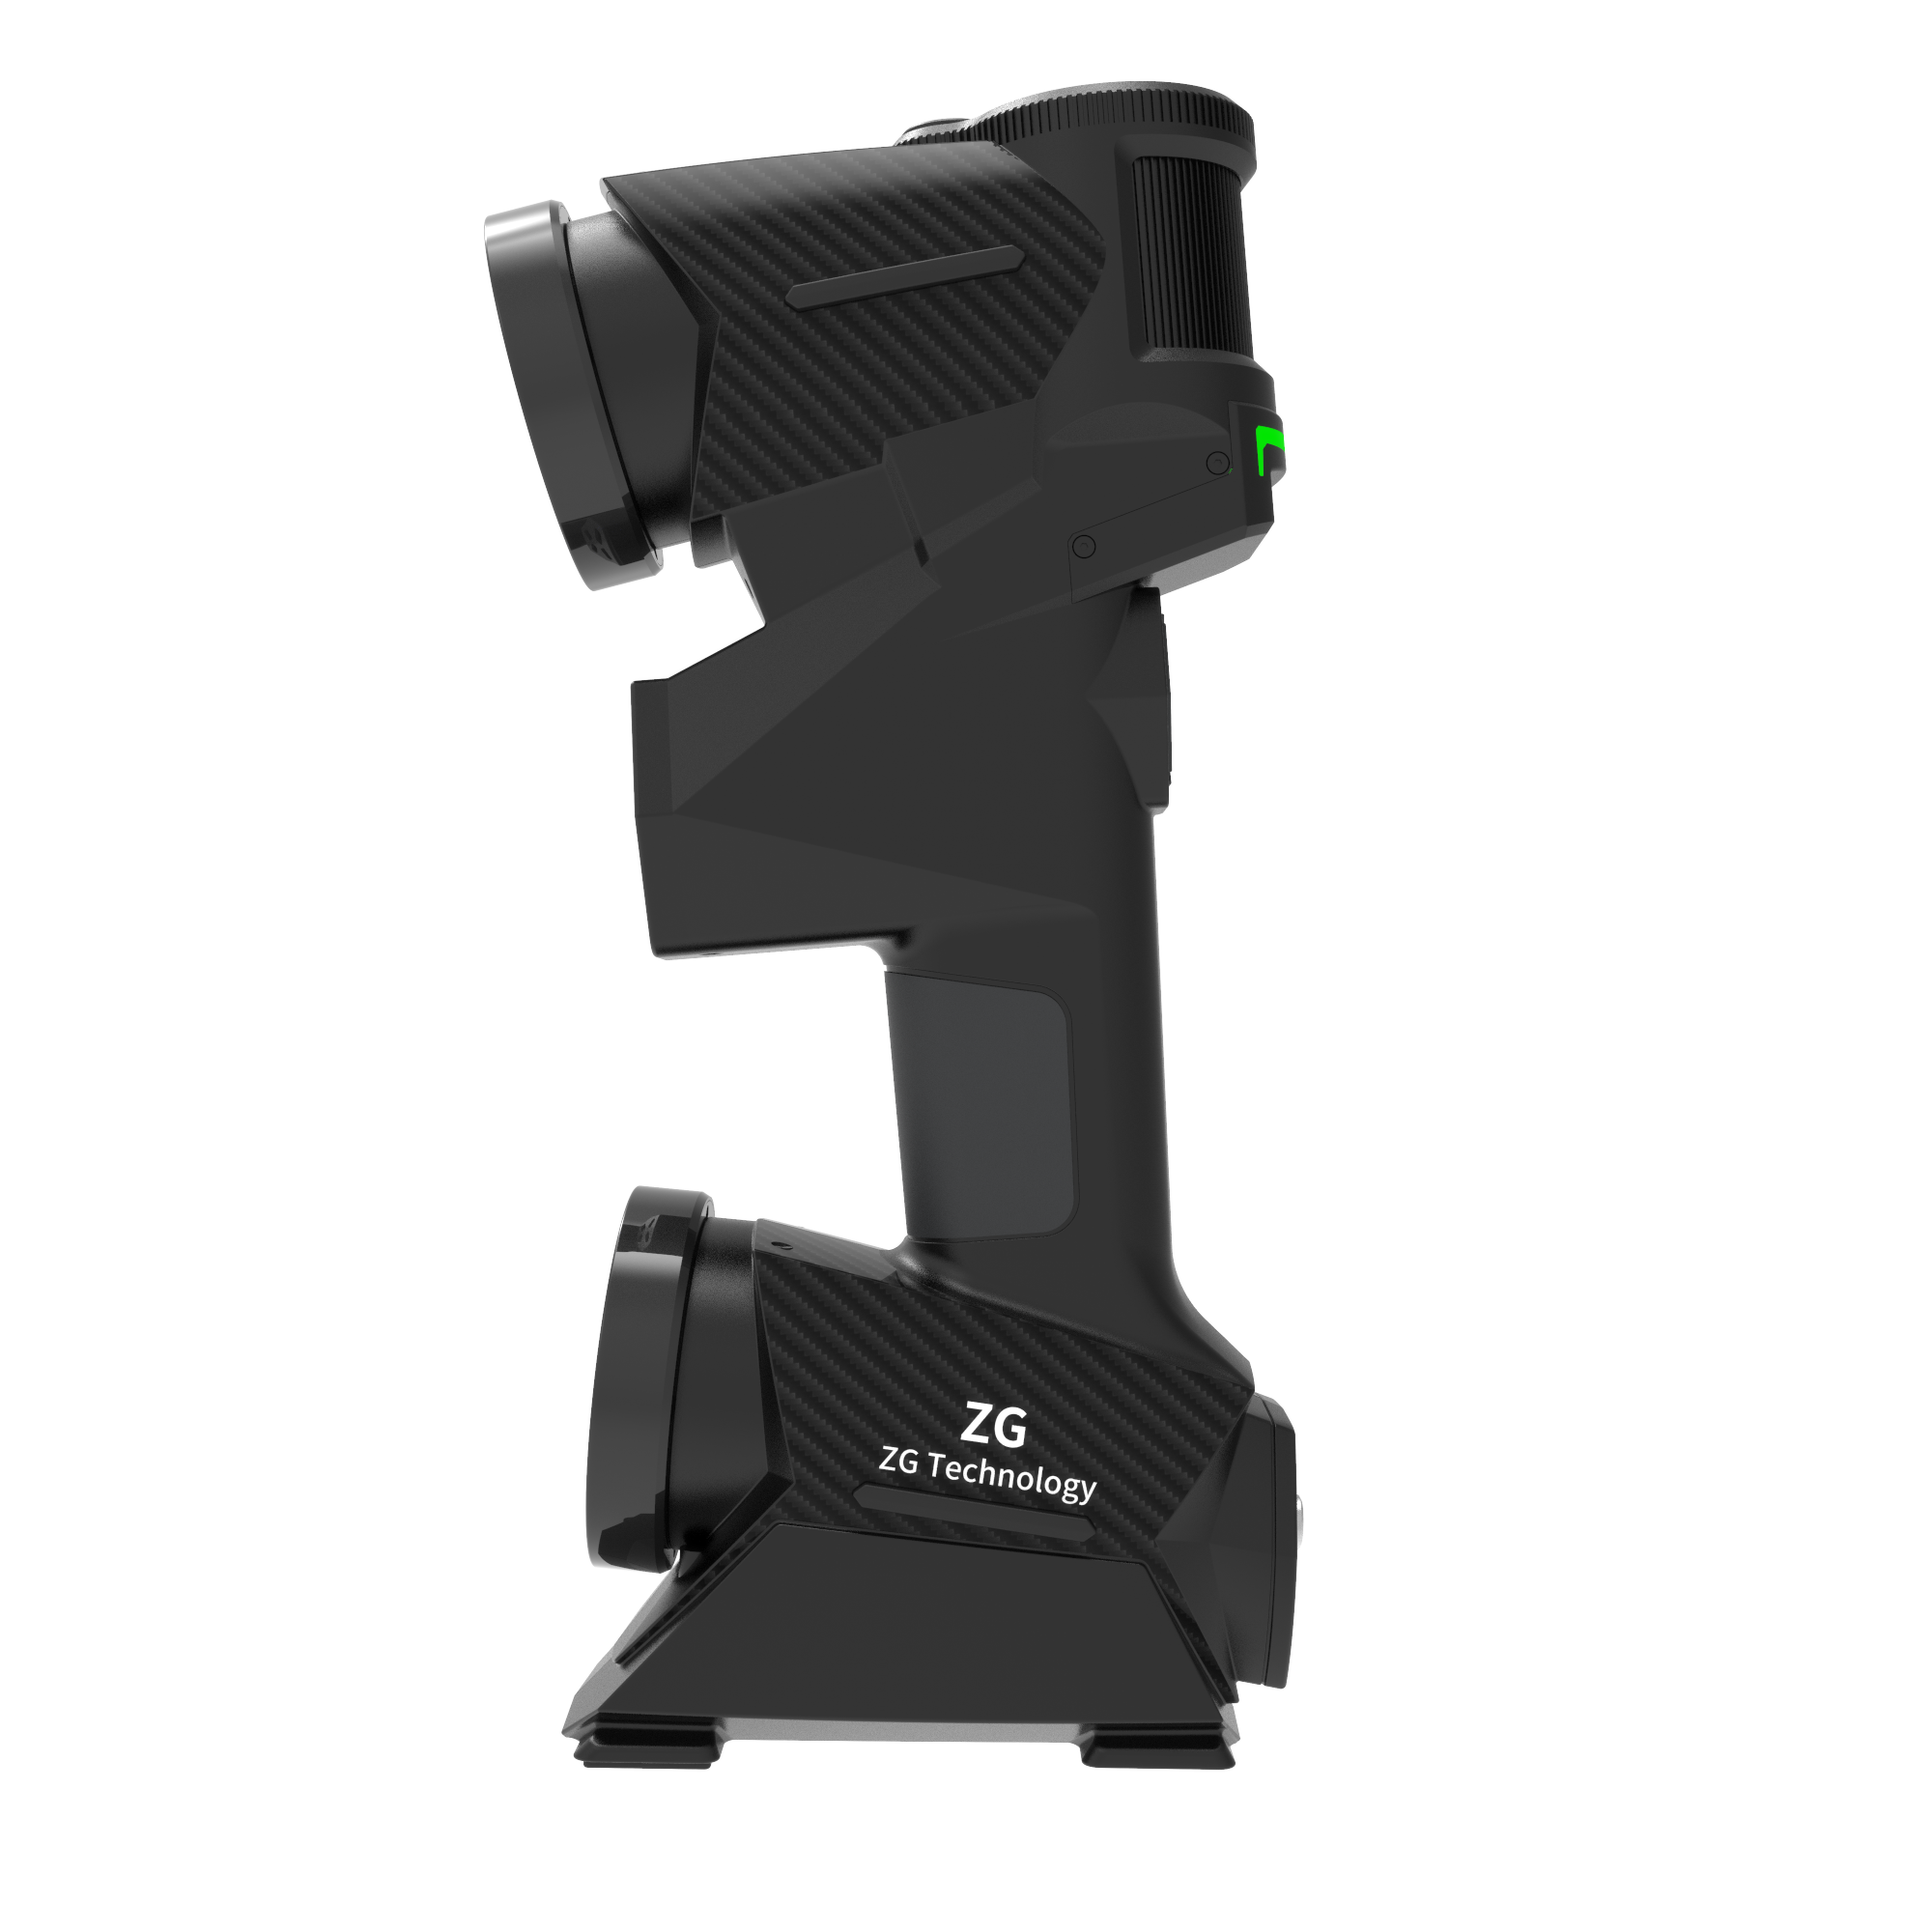 Scanner laser 3D portatile ultra veloce senza marcatori MarvelScan Tracker